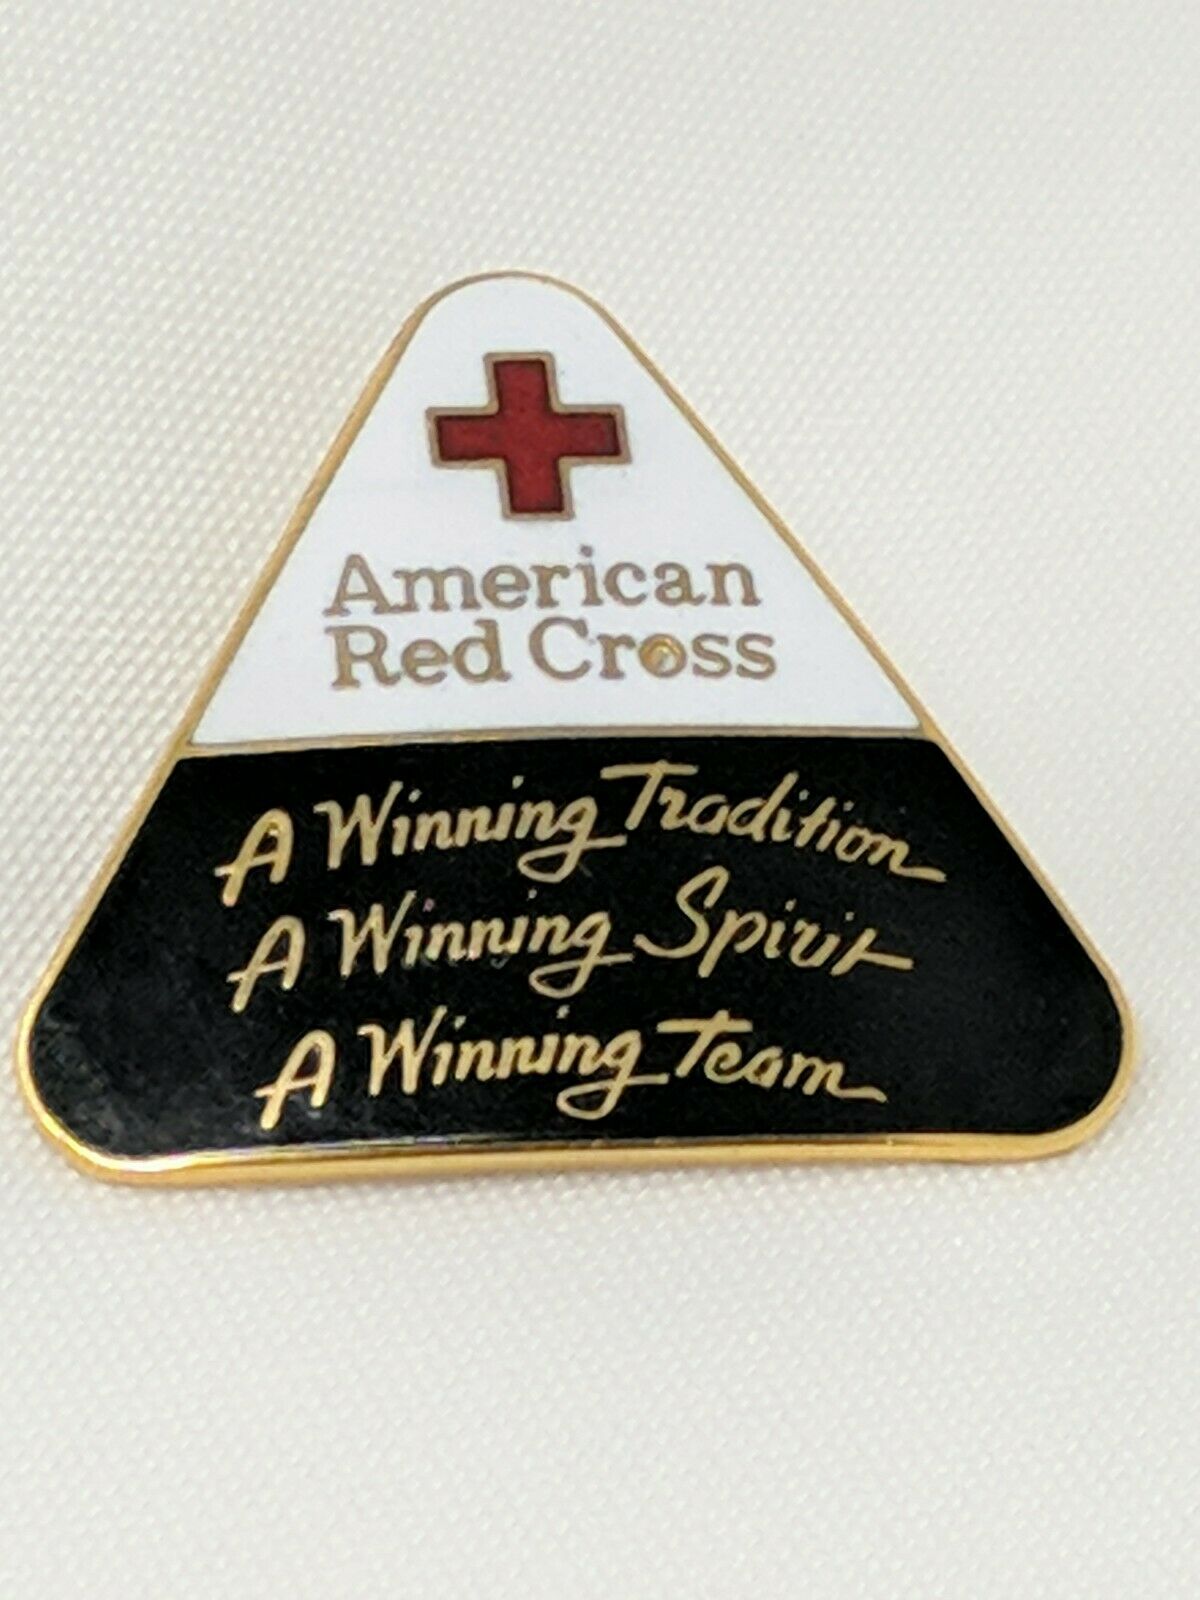 American Red Cross Arc Winning Tradition Spirit Team 24 Kt Gp Pin Bin 8/30